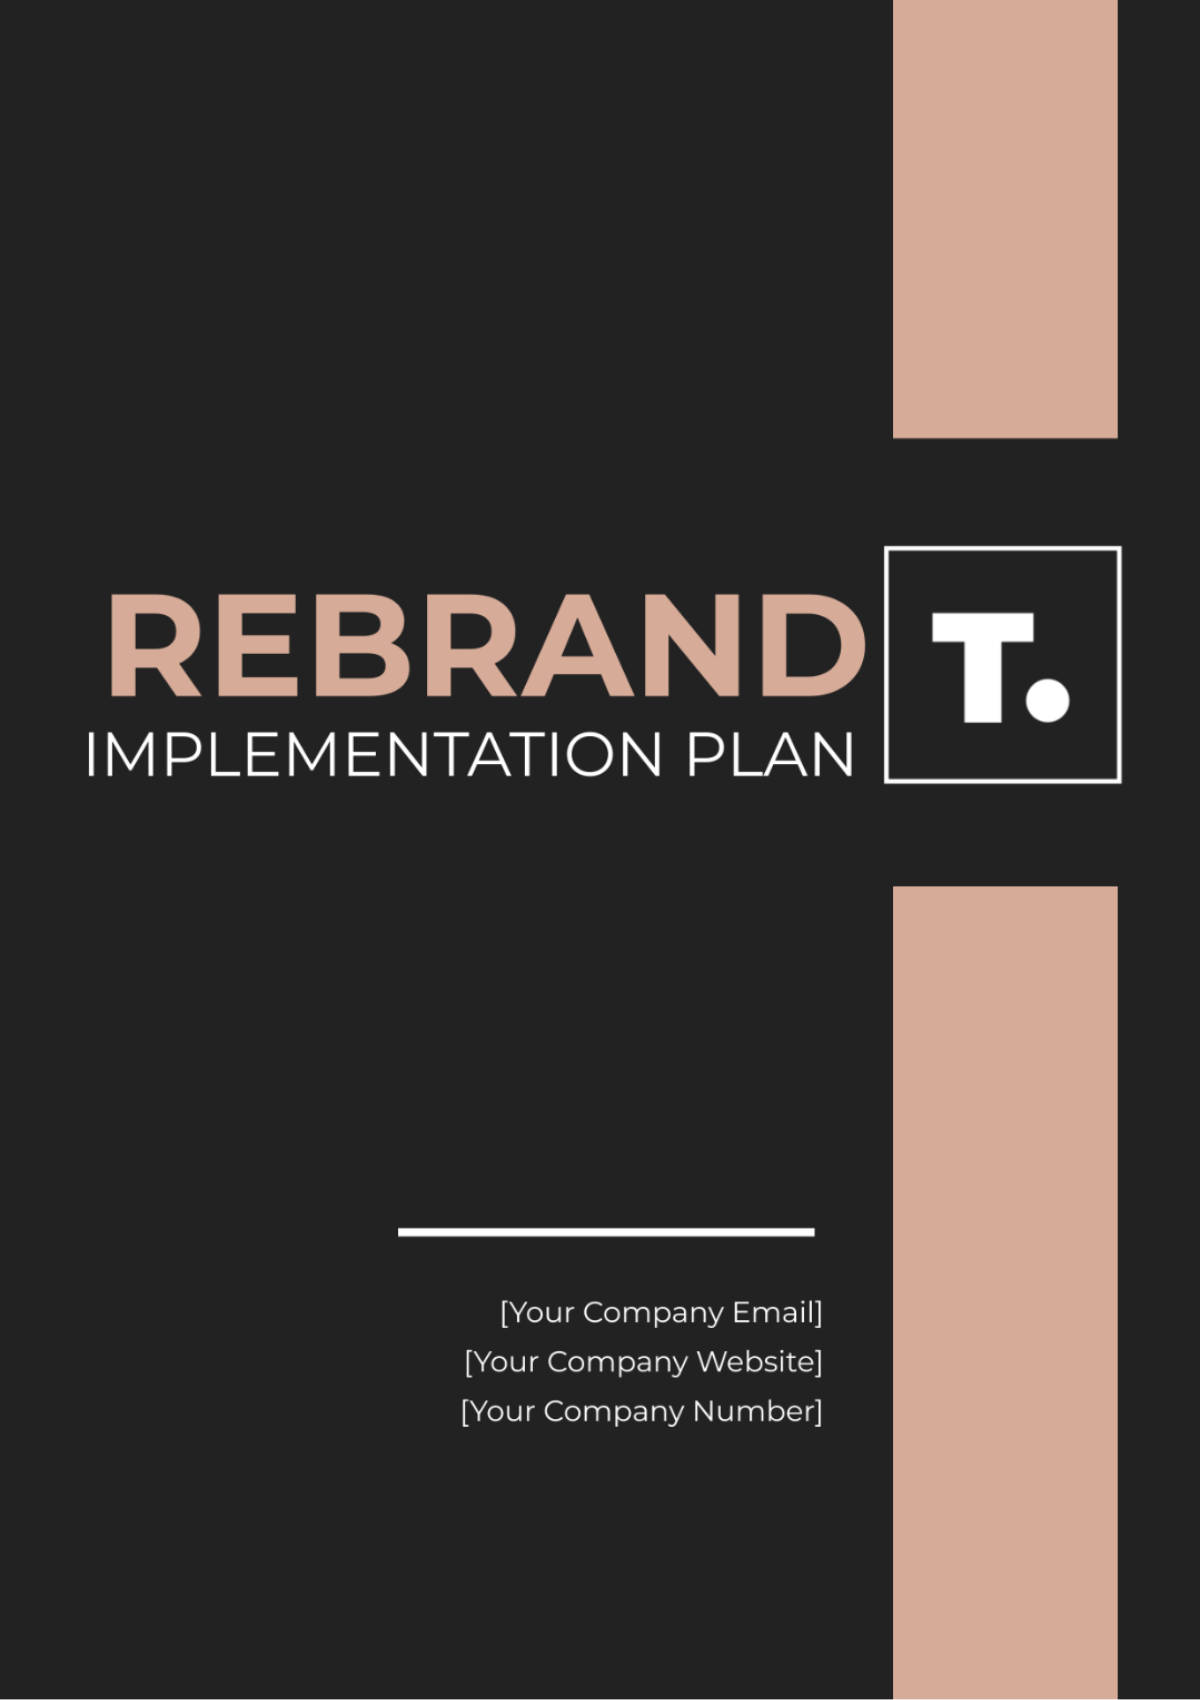 Rebrand Implementation Plan Template